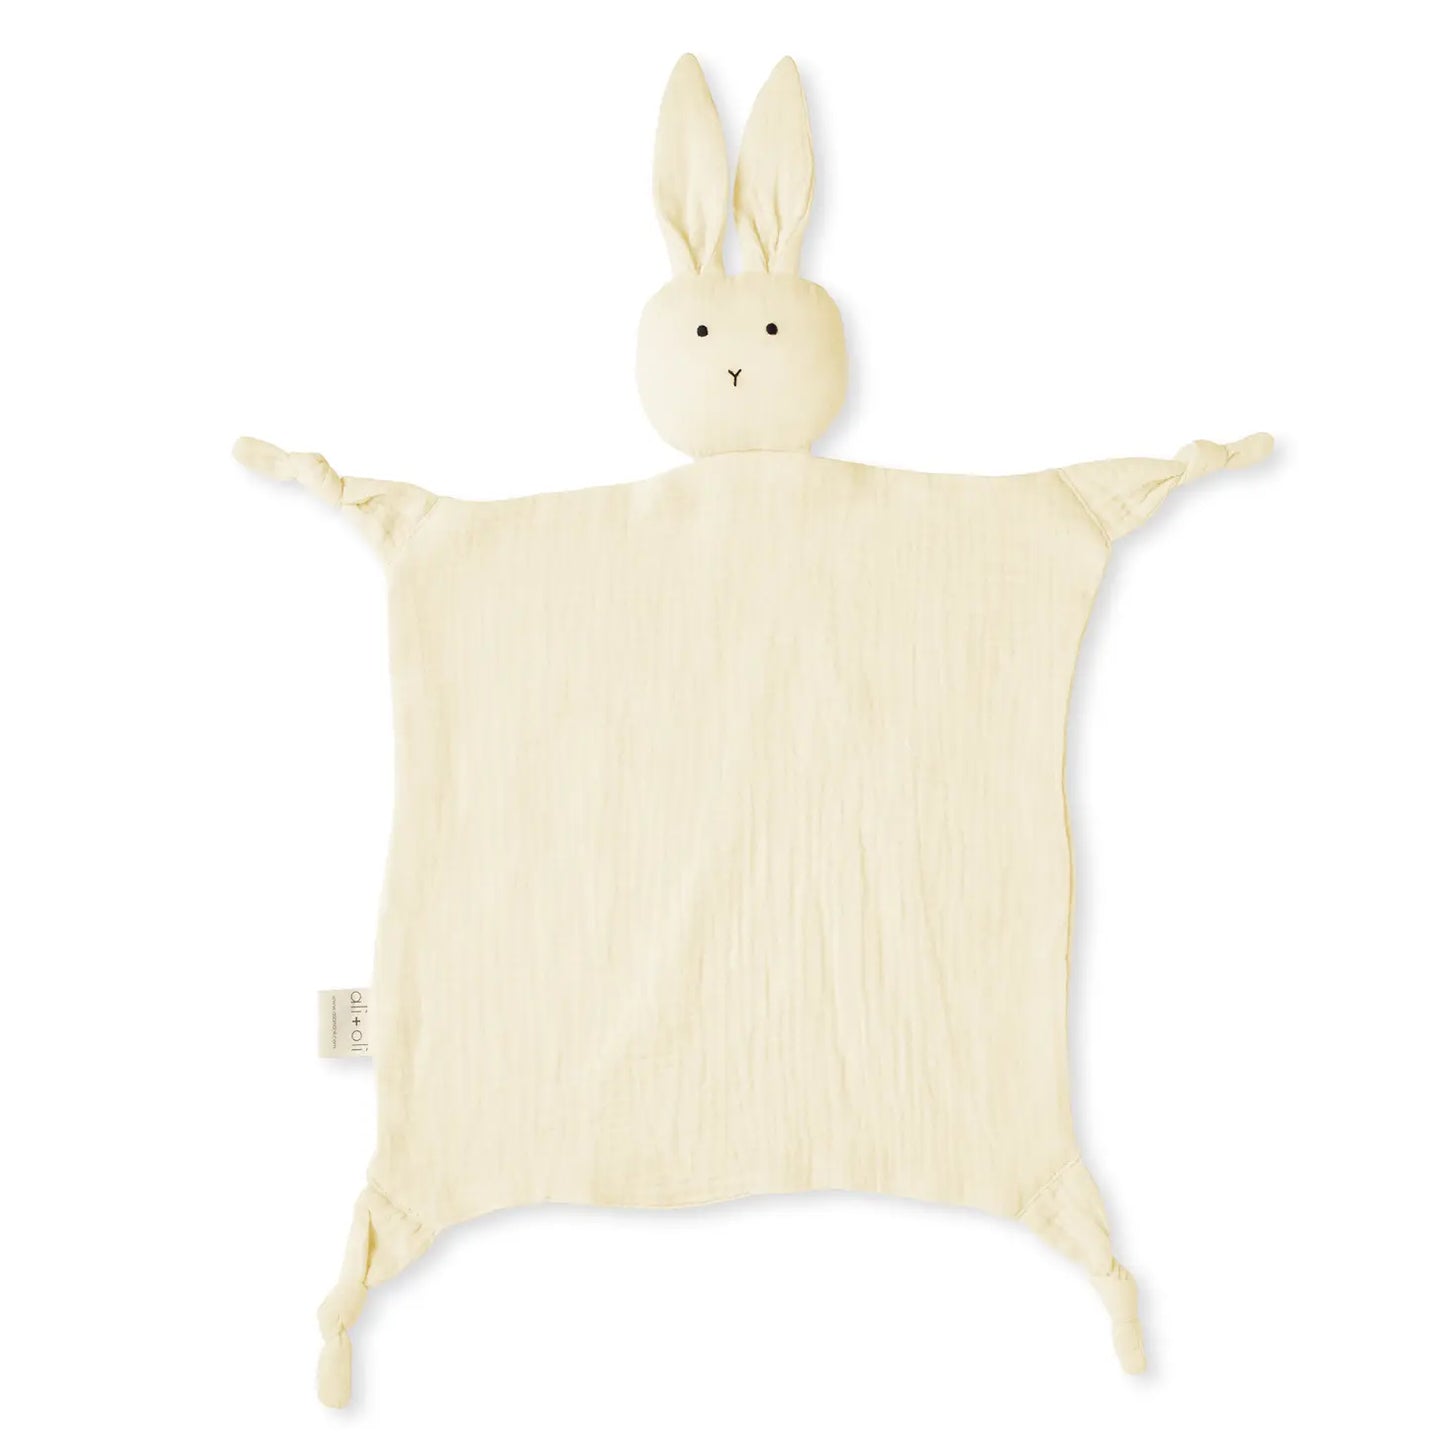 ALI + OLI Cuddle Security Blanket - Bunny